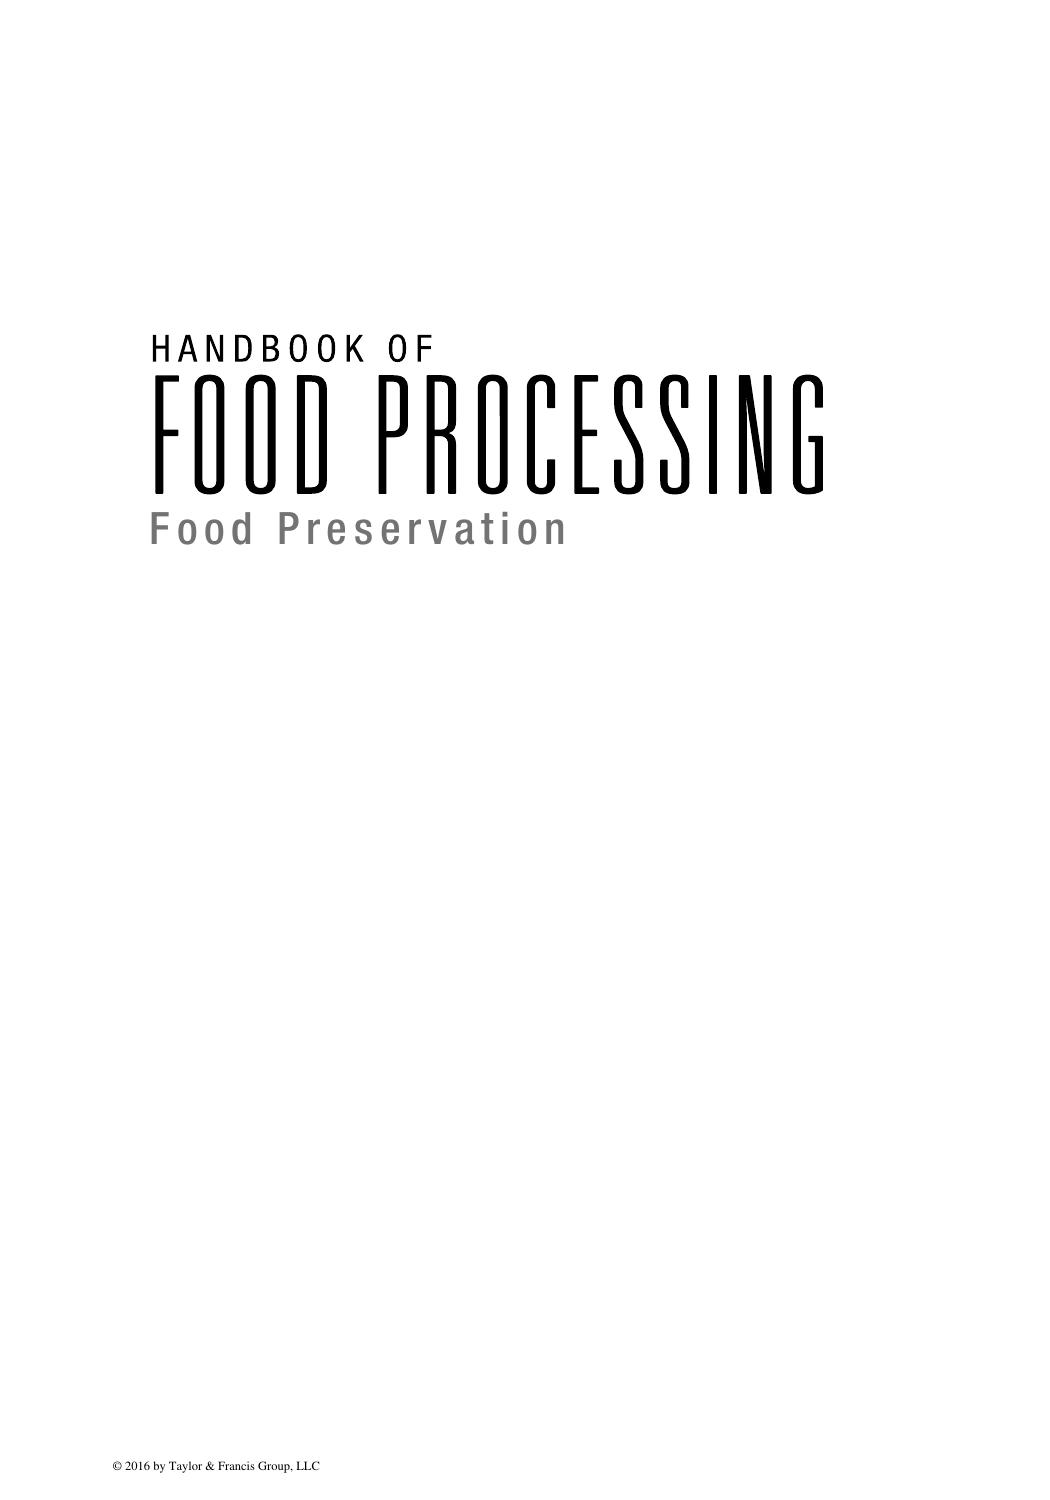 Handbook of food processing   food preservation 2016